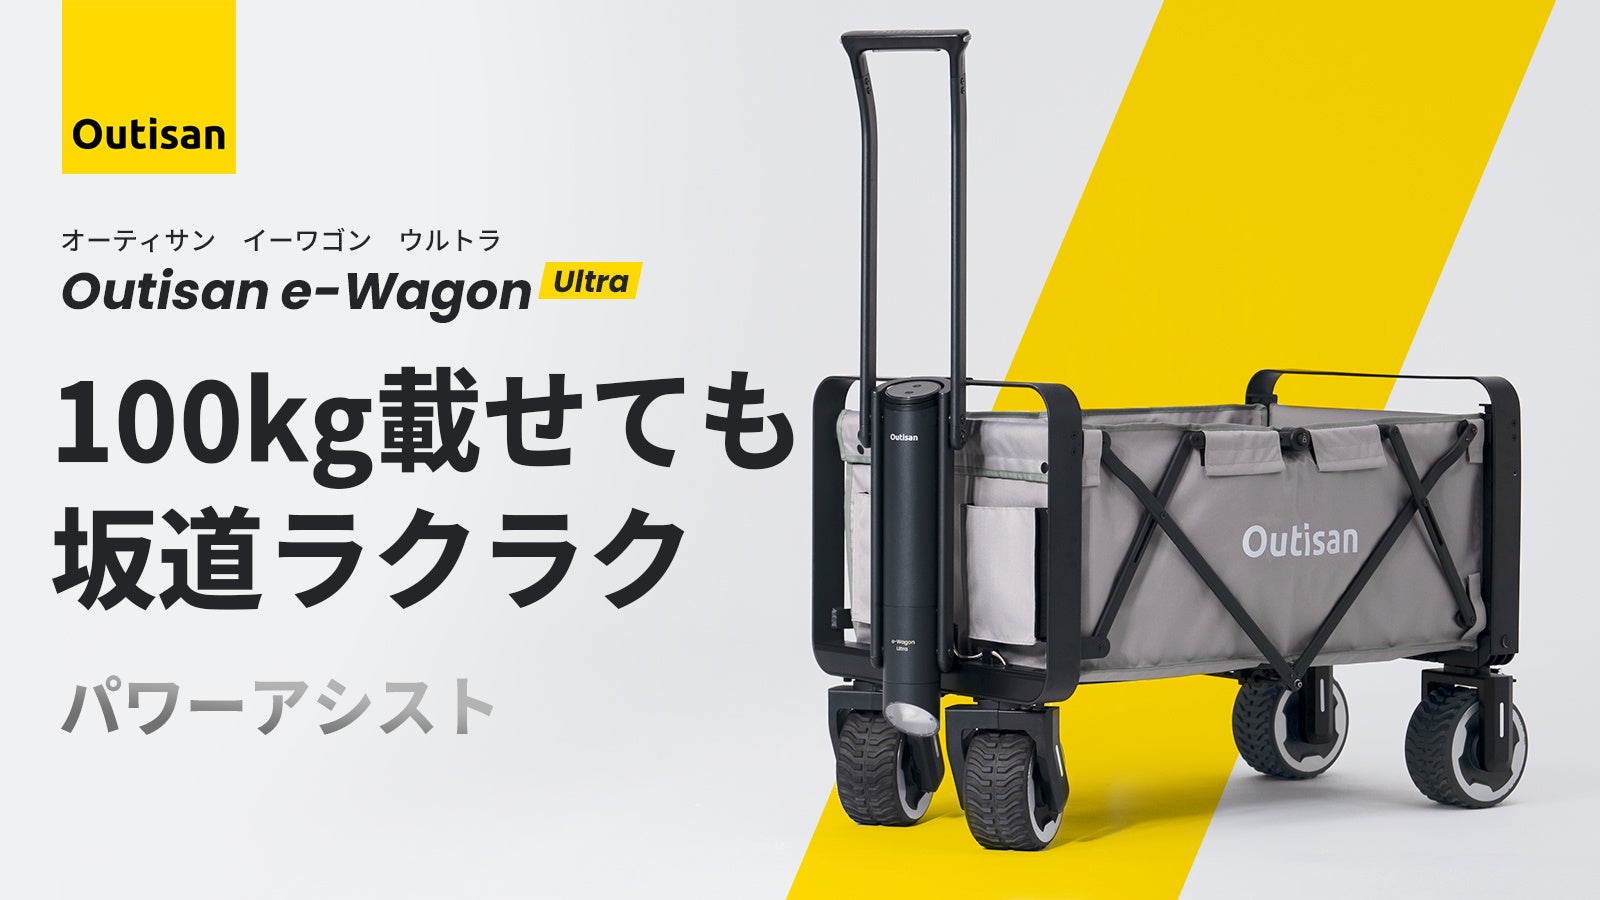 100kg載せても坂道ラクラク｜パワーアシスト付きスマート電動ワゴン「Outisan e-Wagon Ultra」が「Makuake」にて日本初公開！